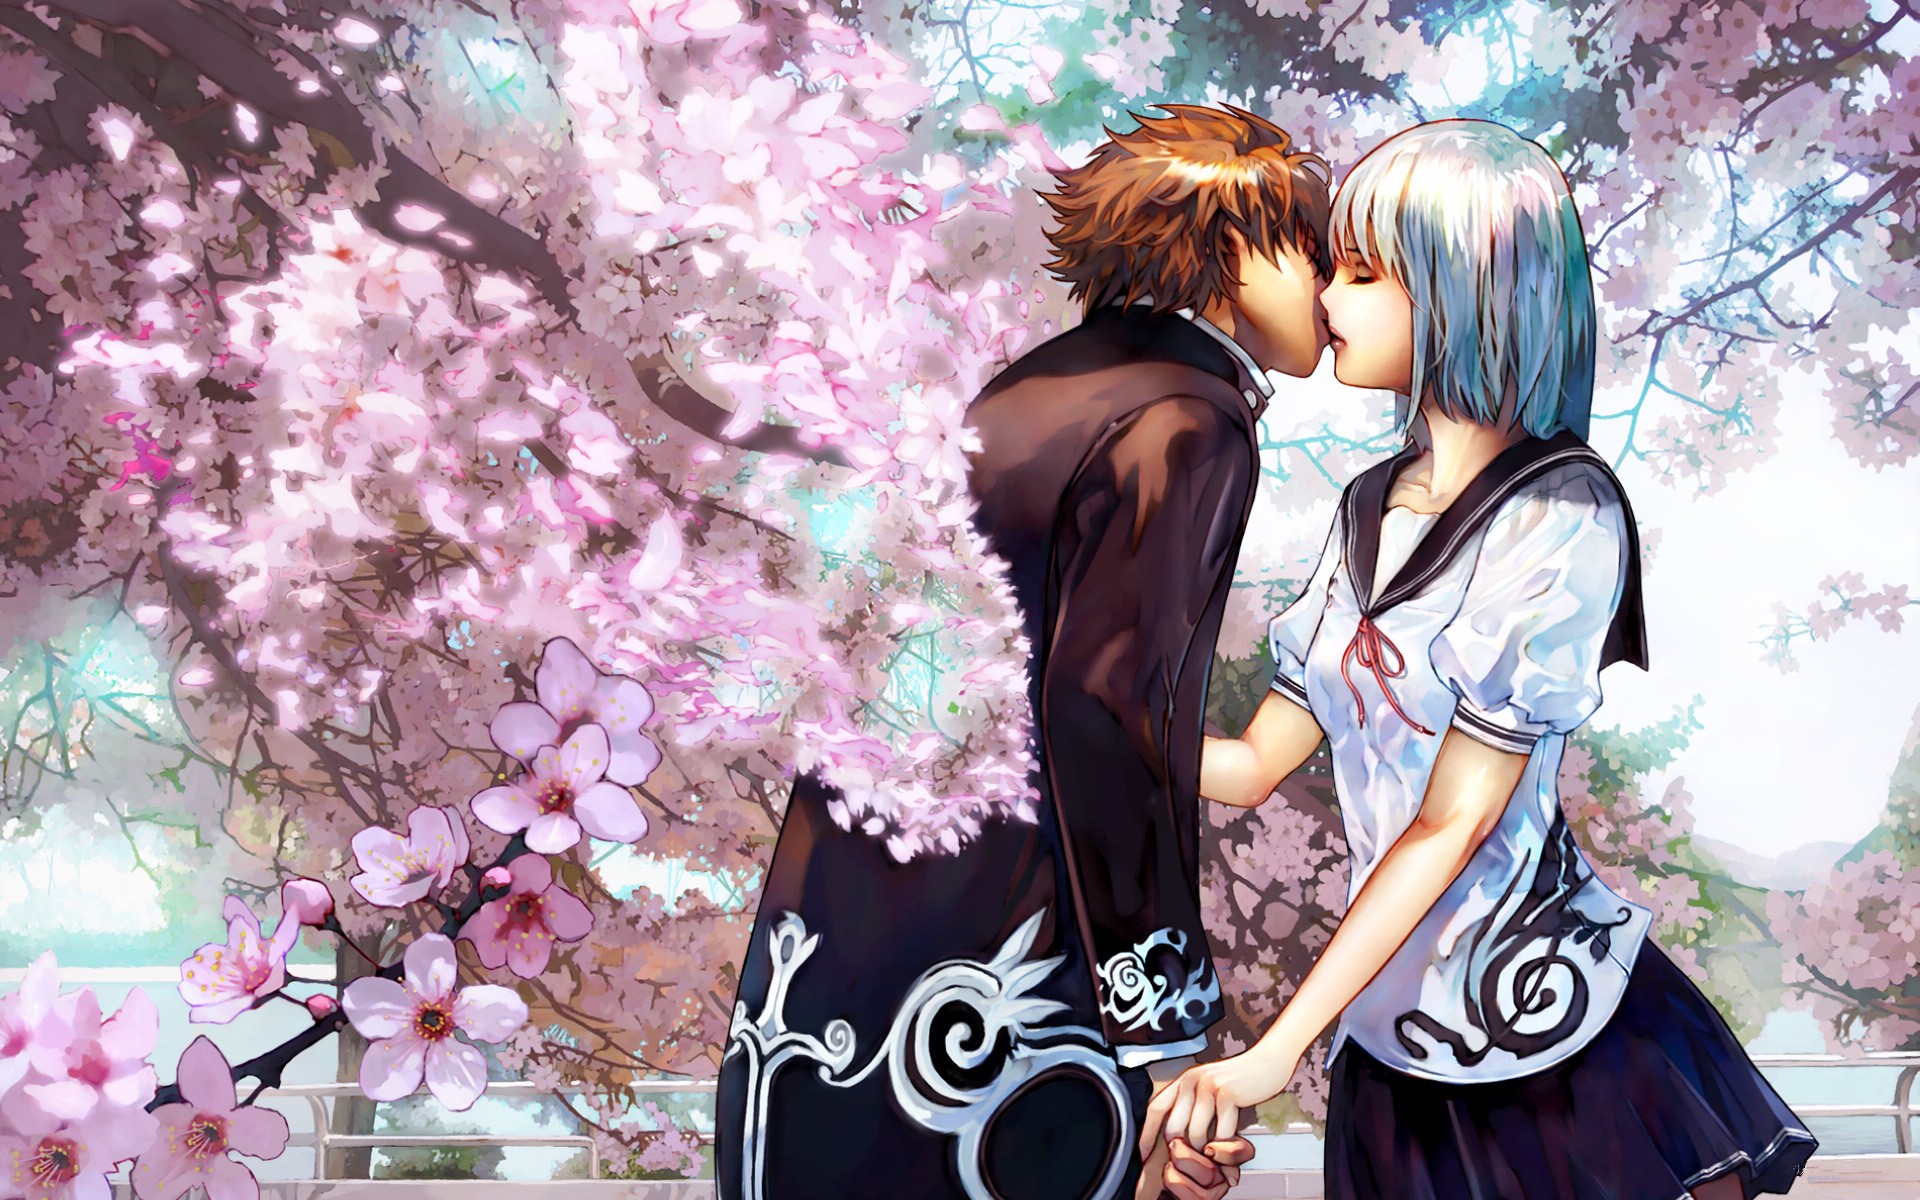 Sakura Anime Romantic Kiss Wallpaper Desktop Anime Girl And Boy